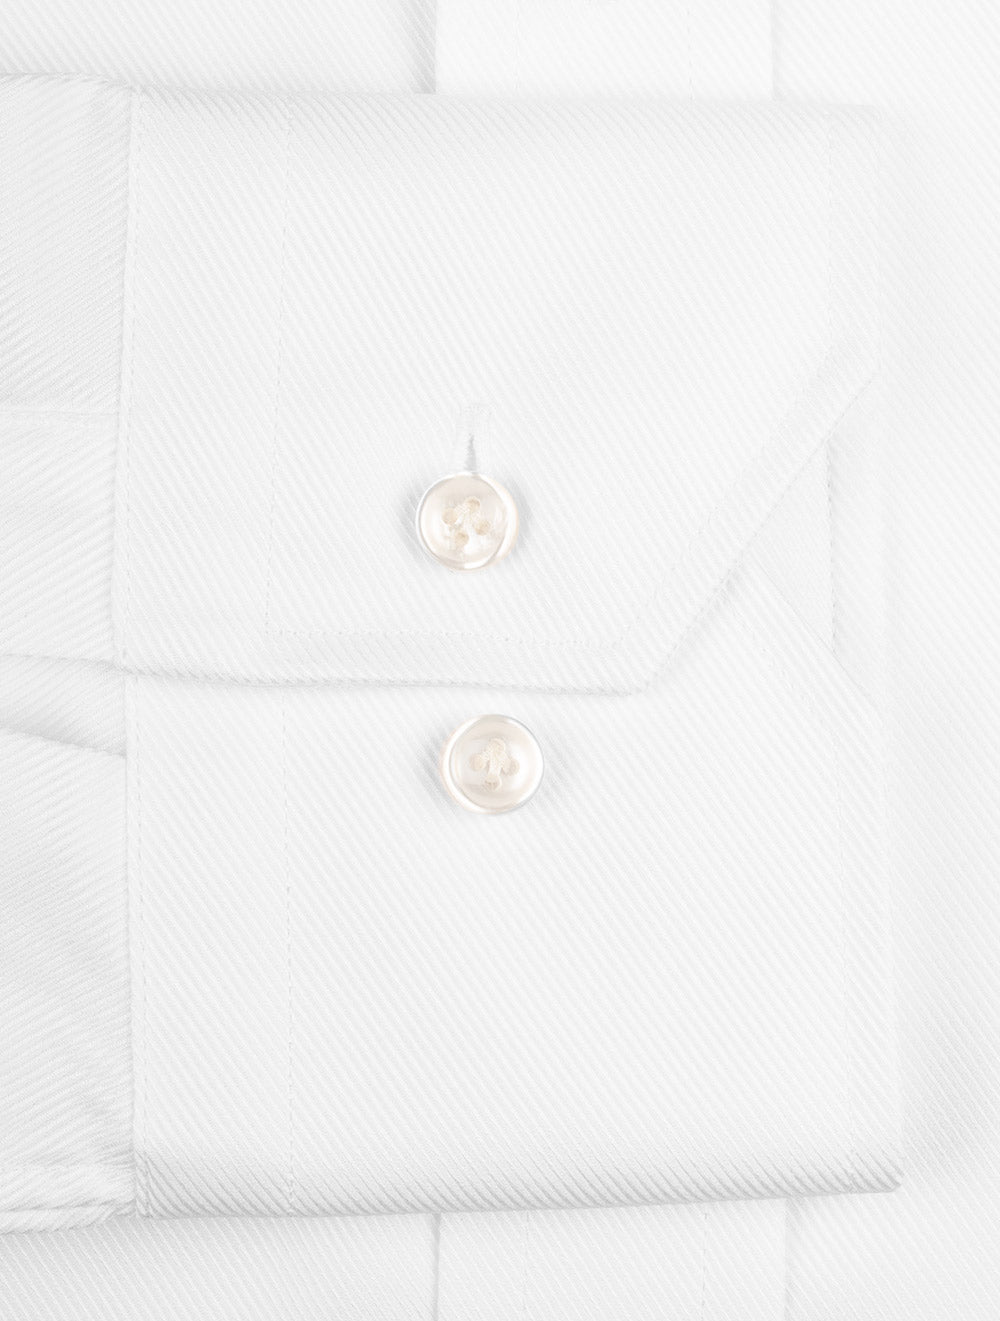 Thomas Mason Twill Classic Fit Shirt White